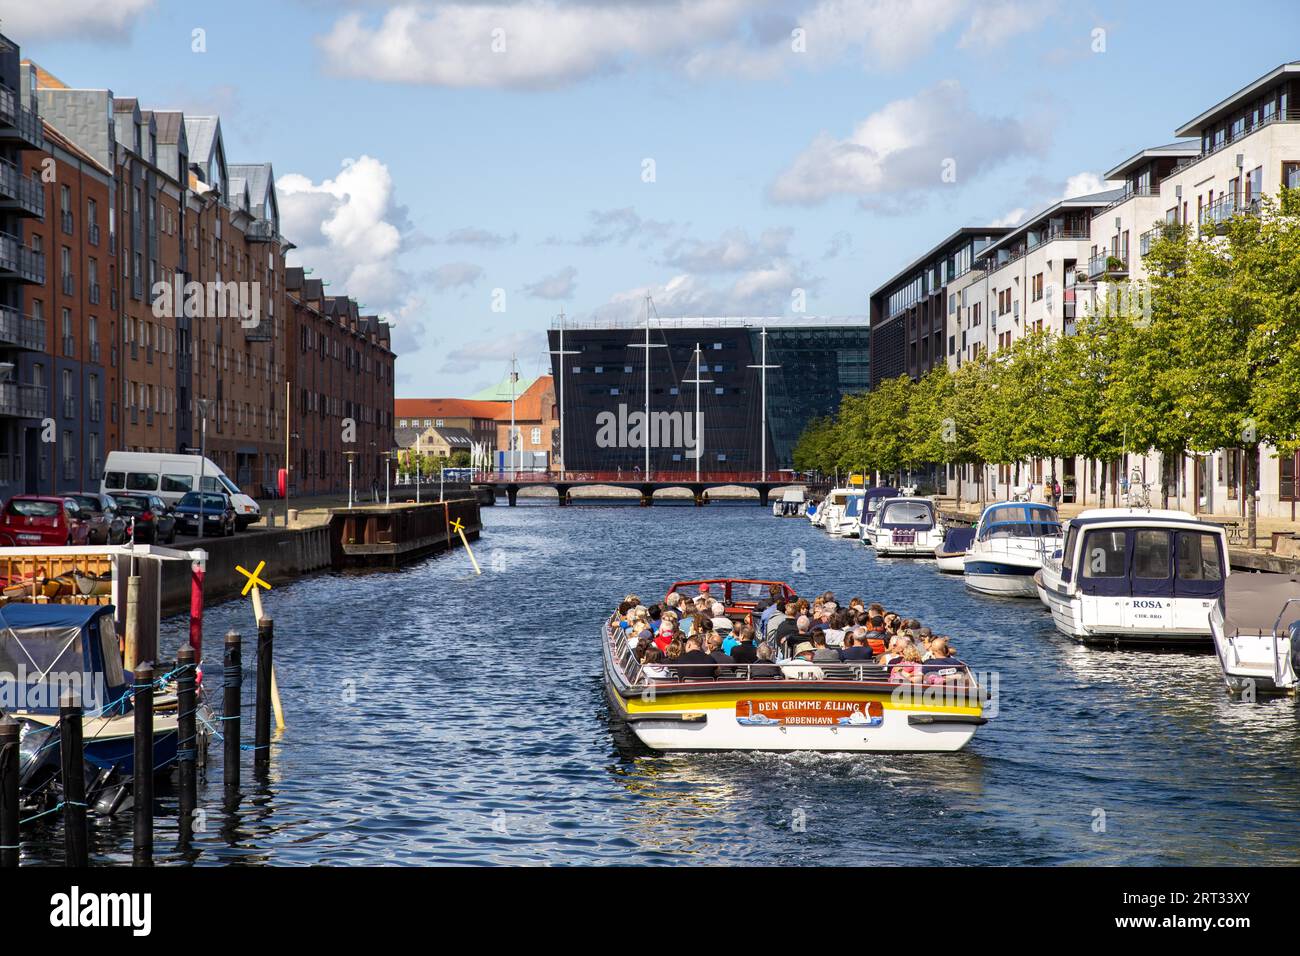 Copenhagen, Denmark, August 21, 2019: Tourist boat in a canal in Christianshavn district Stock Photo